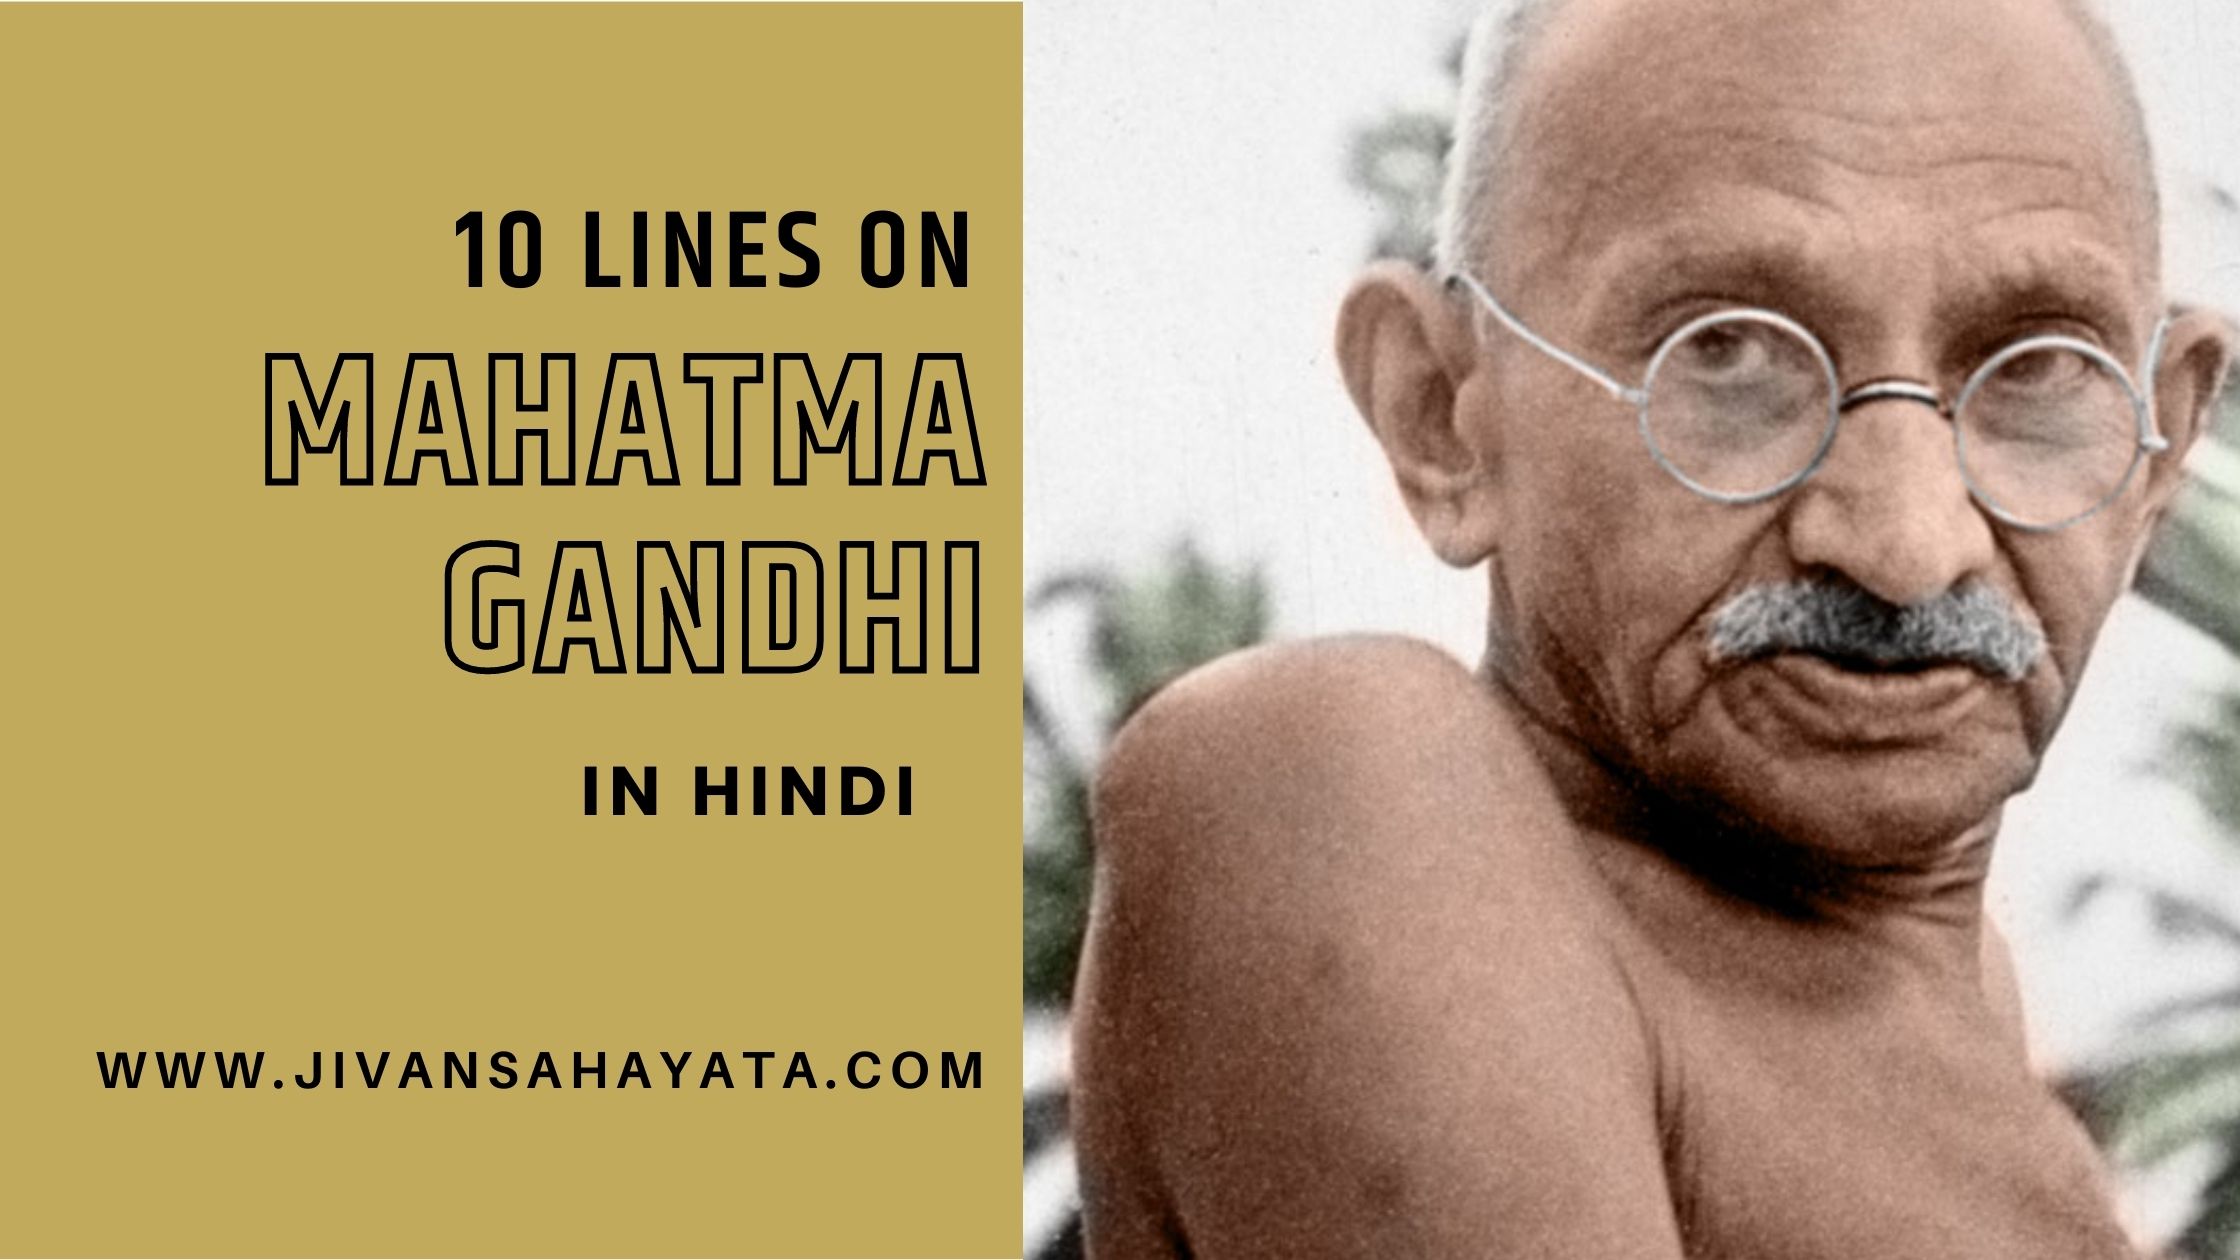 महात्मा गांधी पर 10 लाइन - 10 Lines on Mahatma Gandhi in Hindi